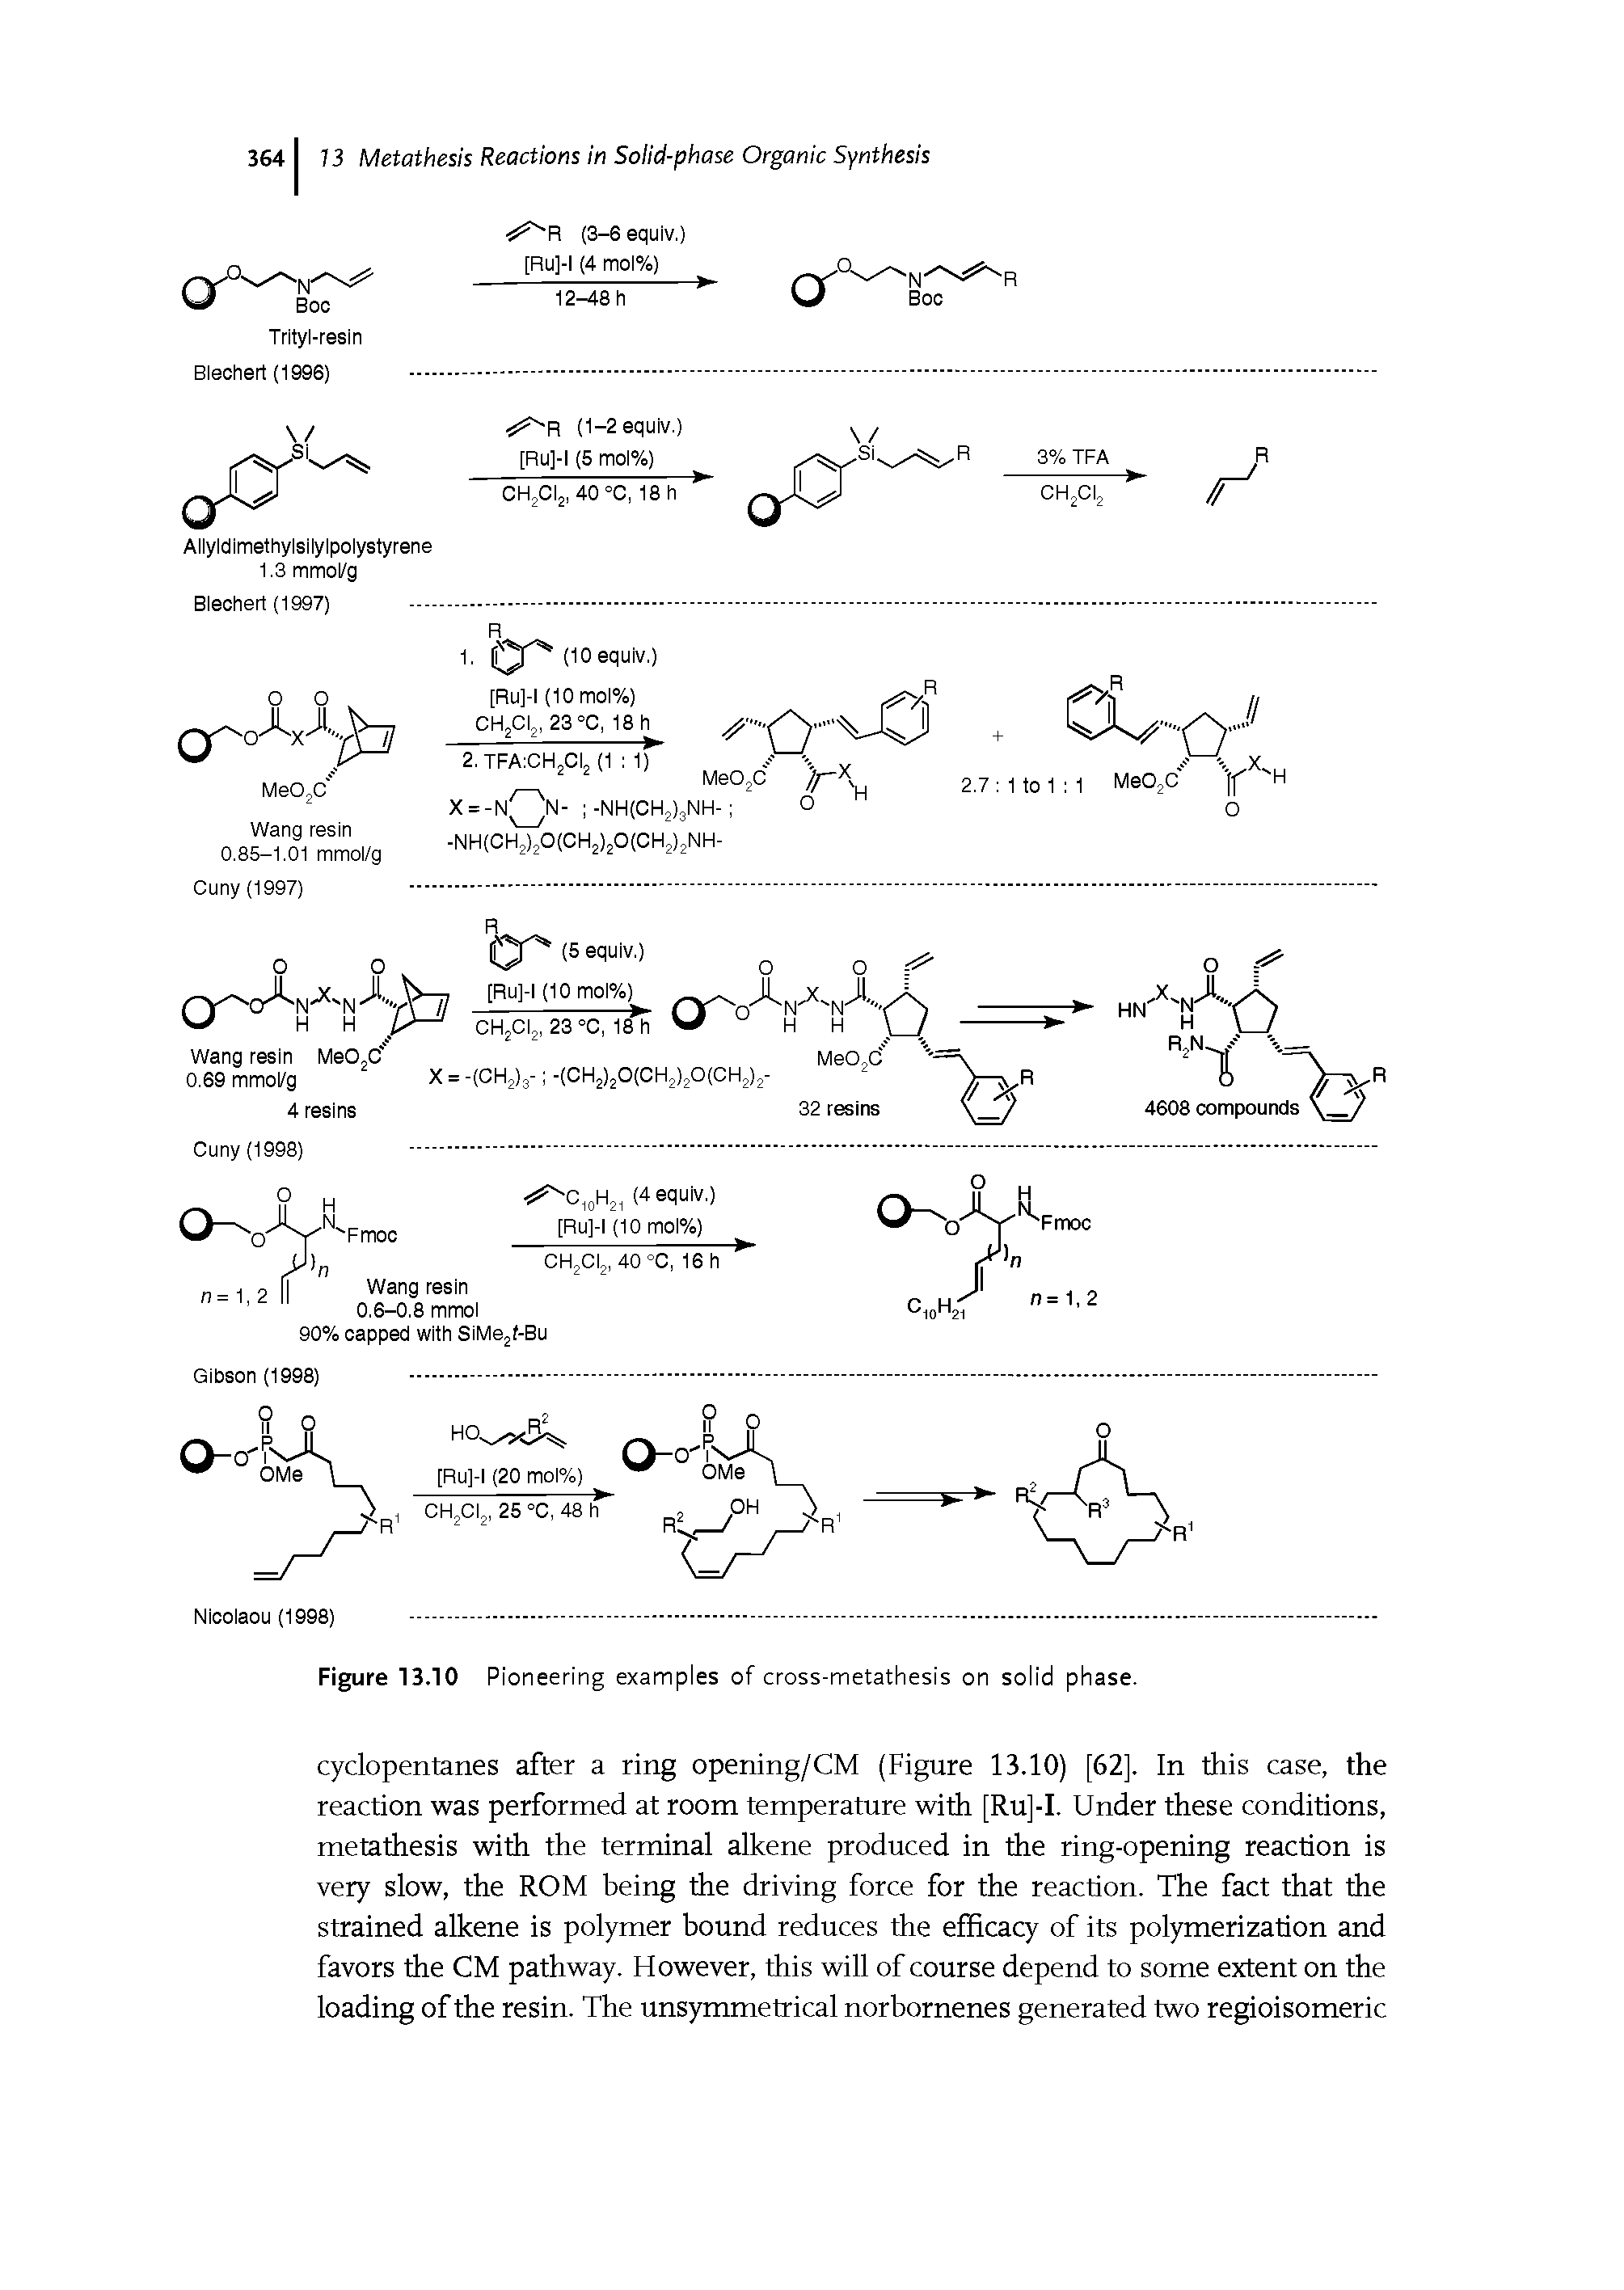 Figure 13.10 Pioneering examples of cross-metathesis on solid phase.